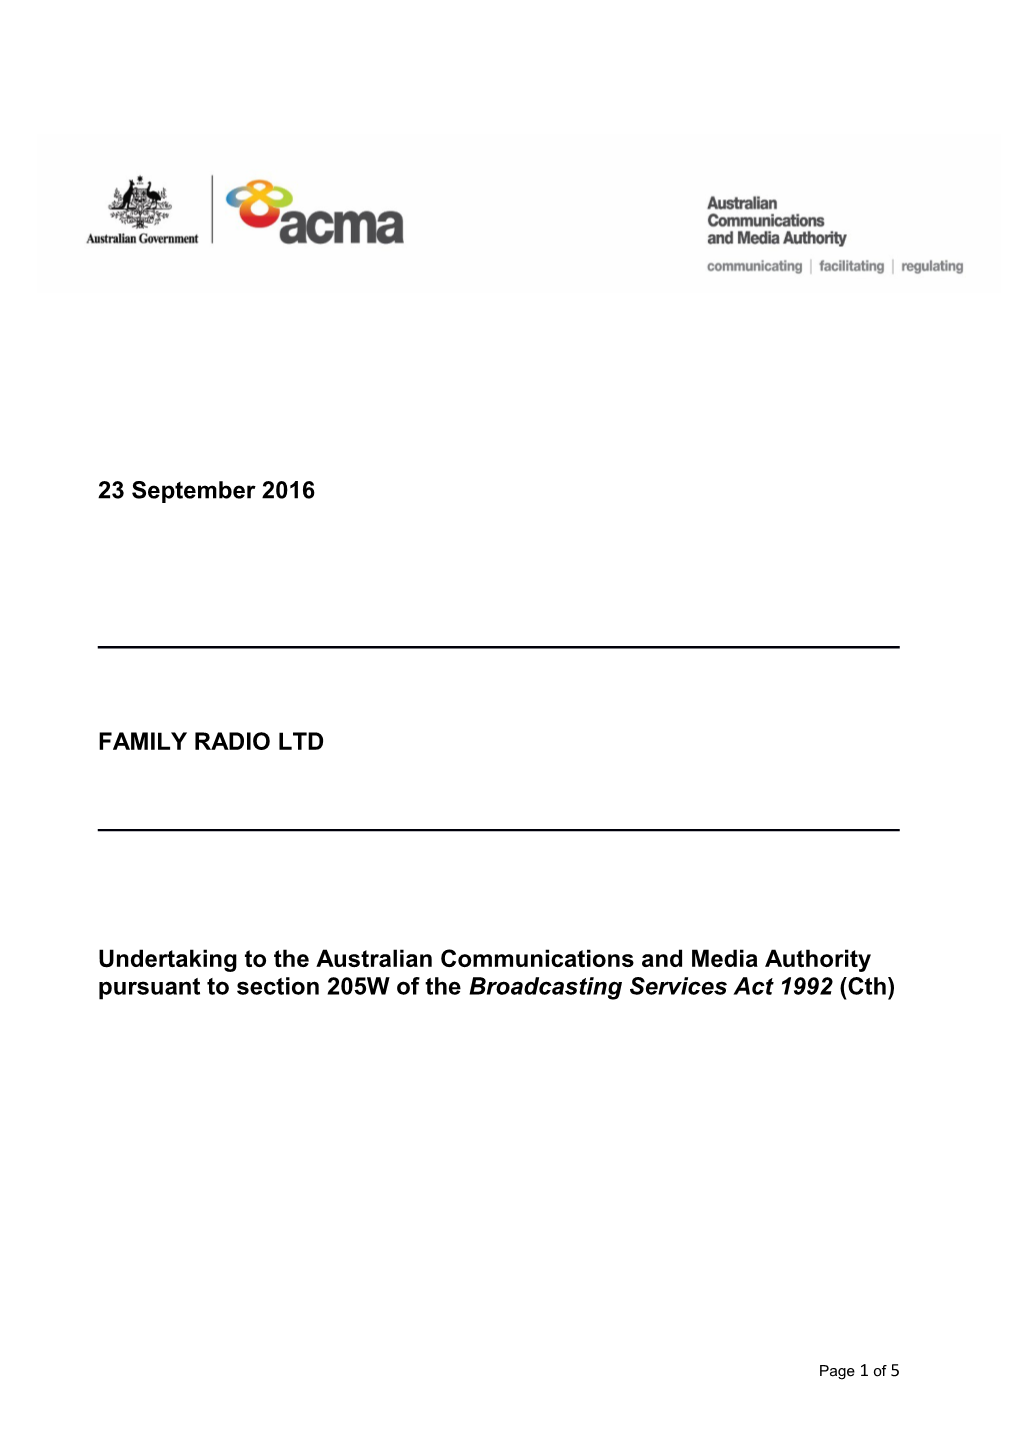 Family Radio Ltd